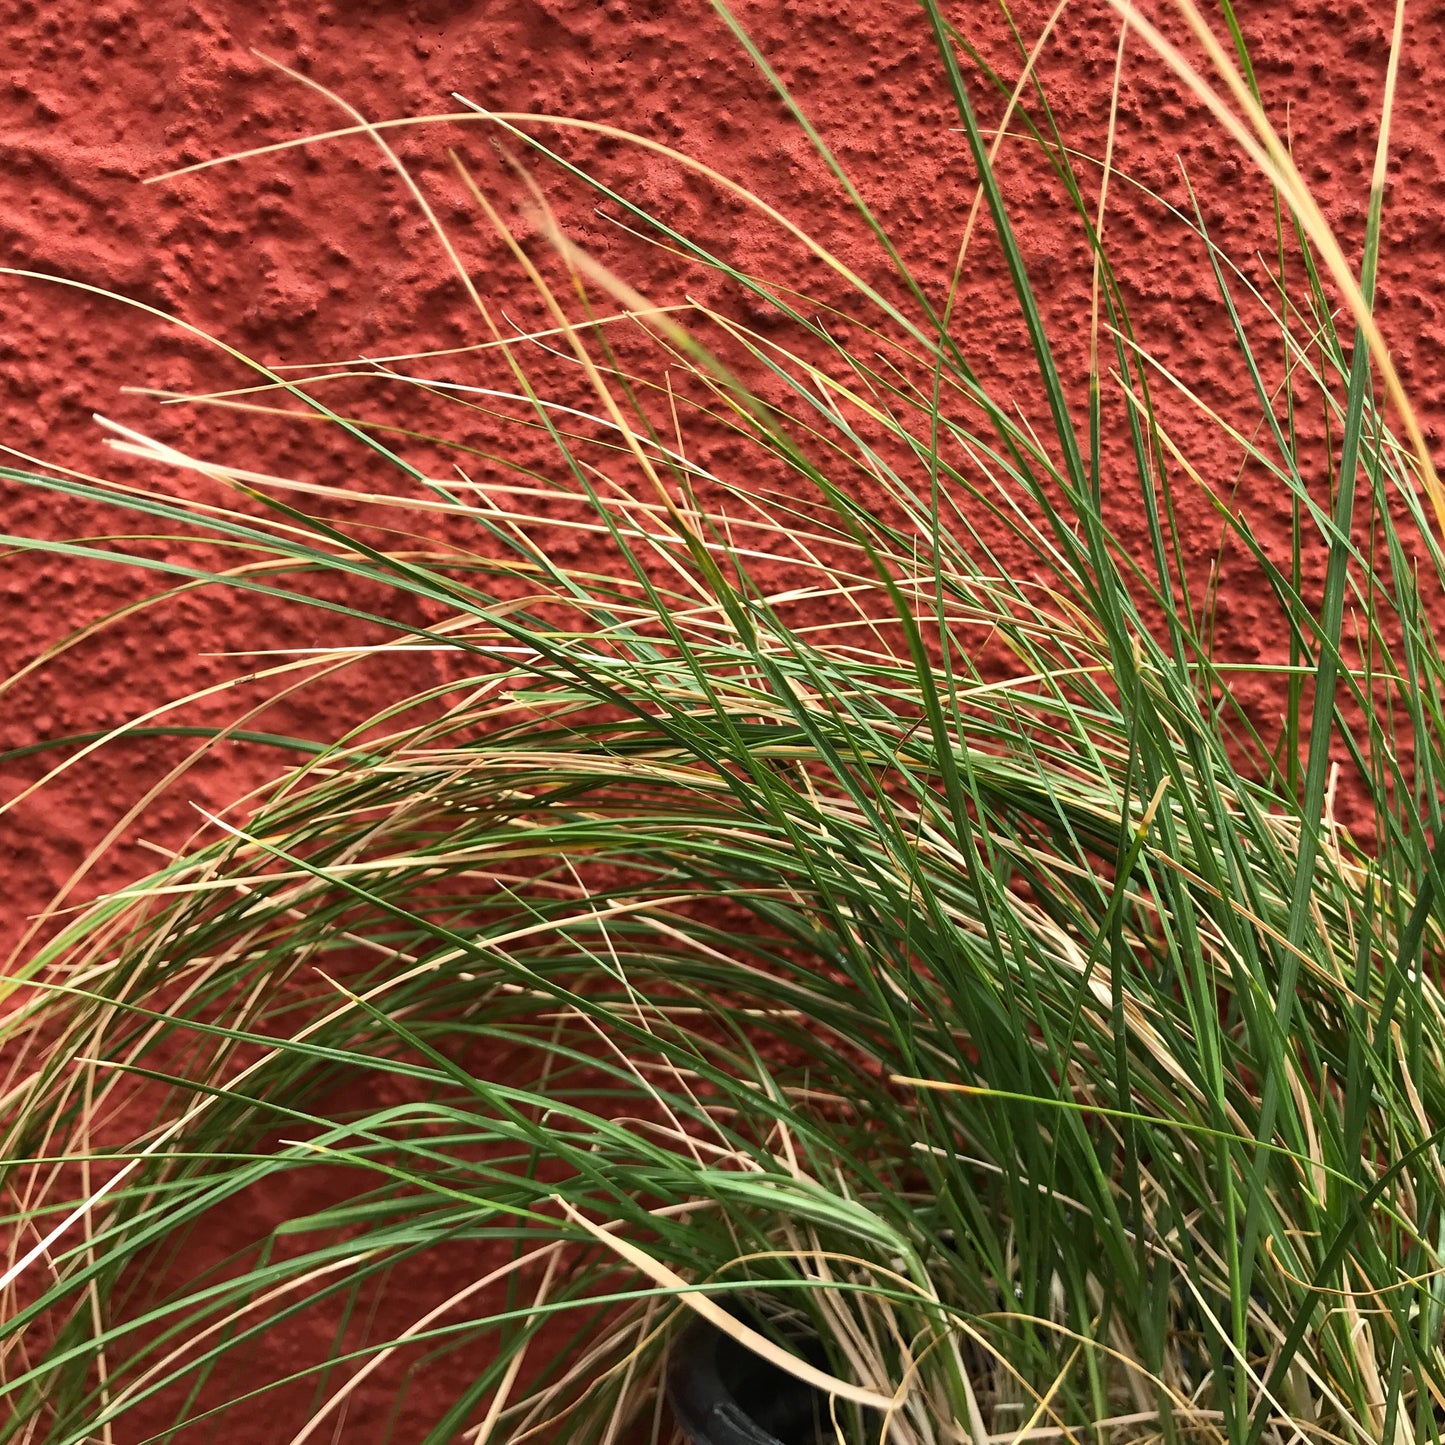 Carex praegracilis - Clustered Meadow Sedge